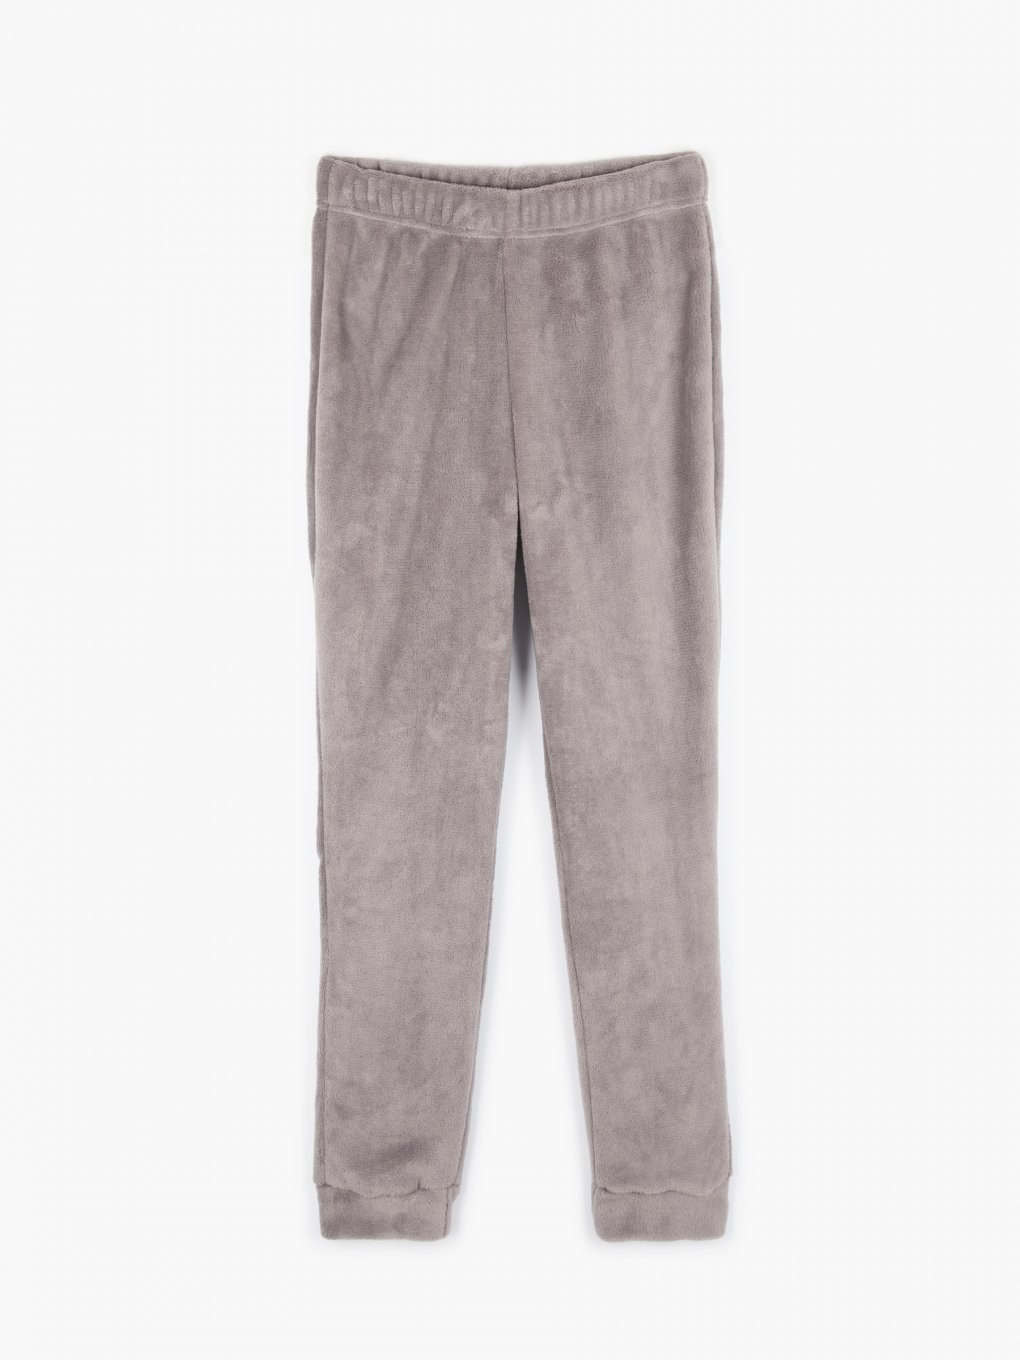 Soft fleece pyjama bottom